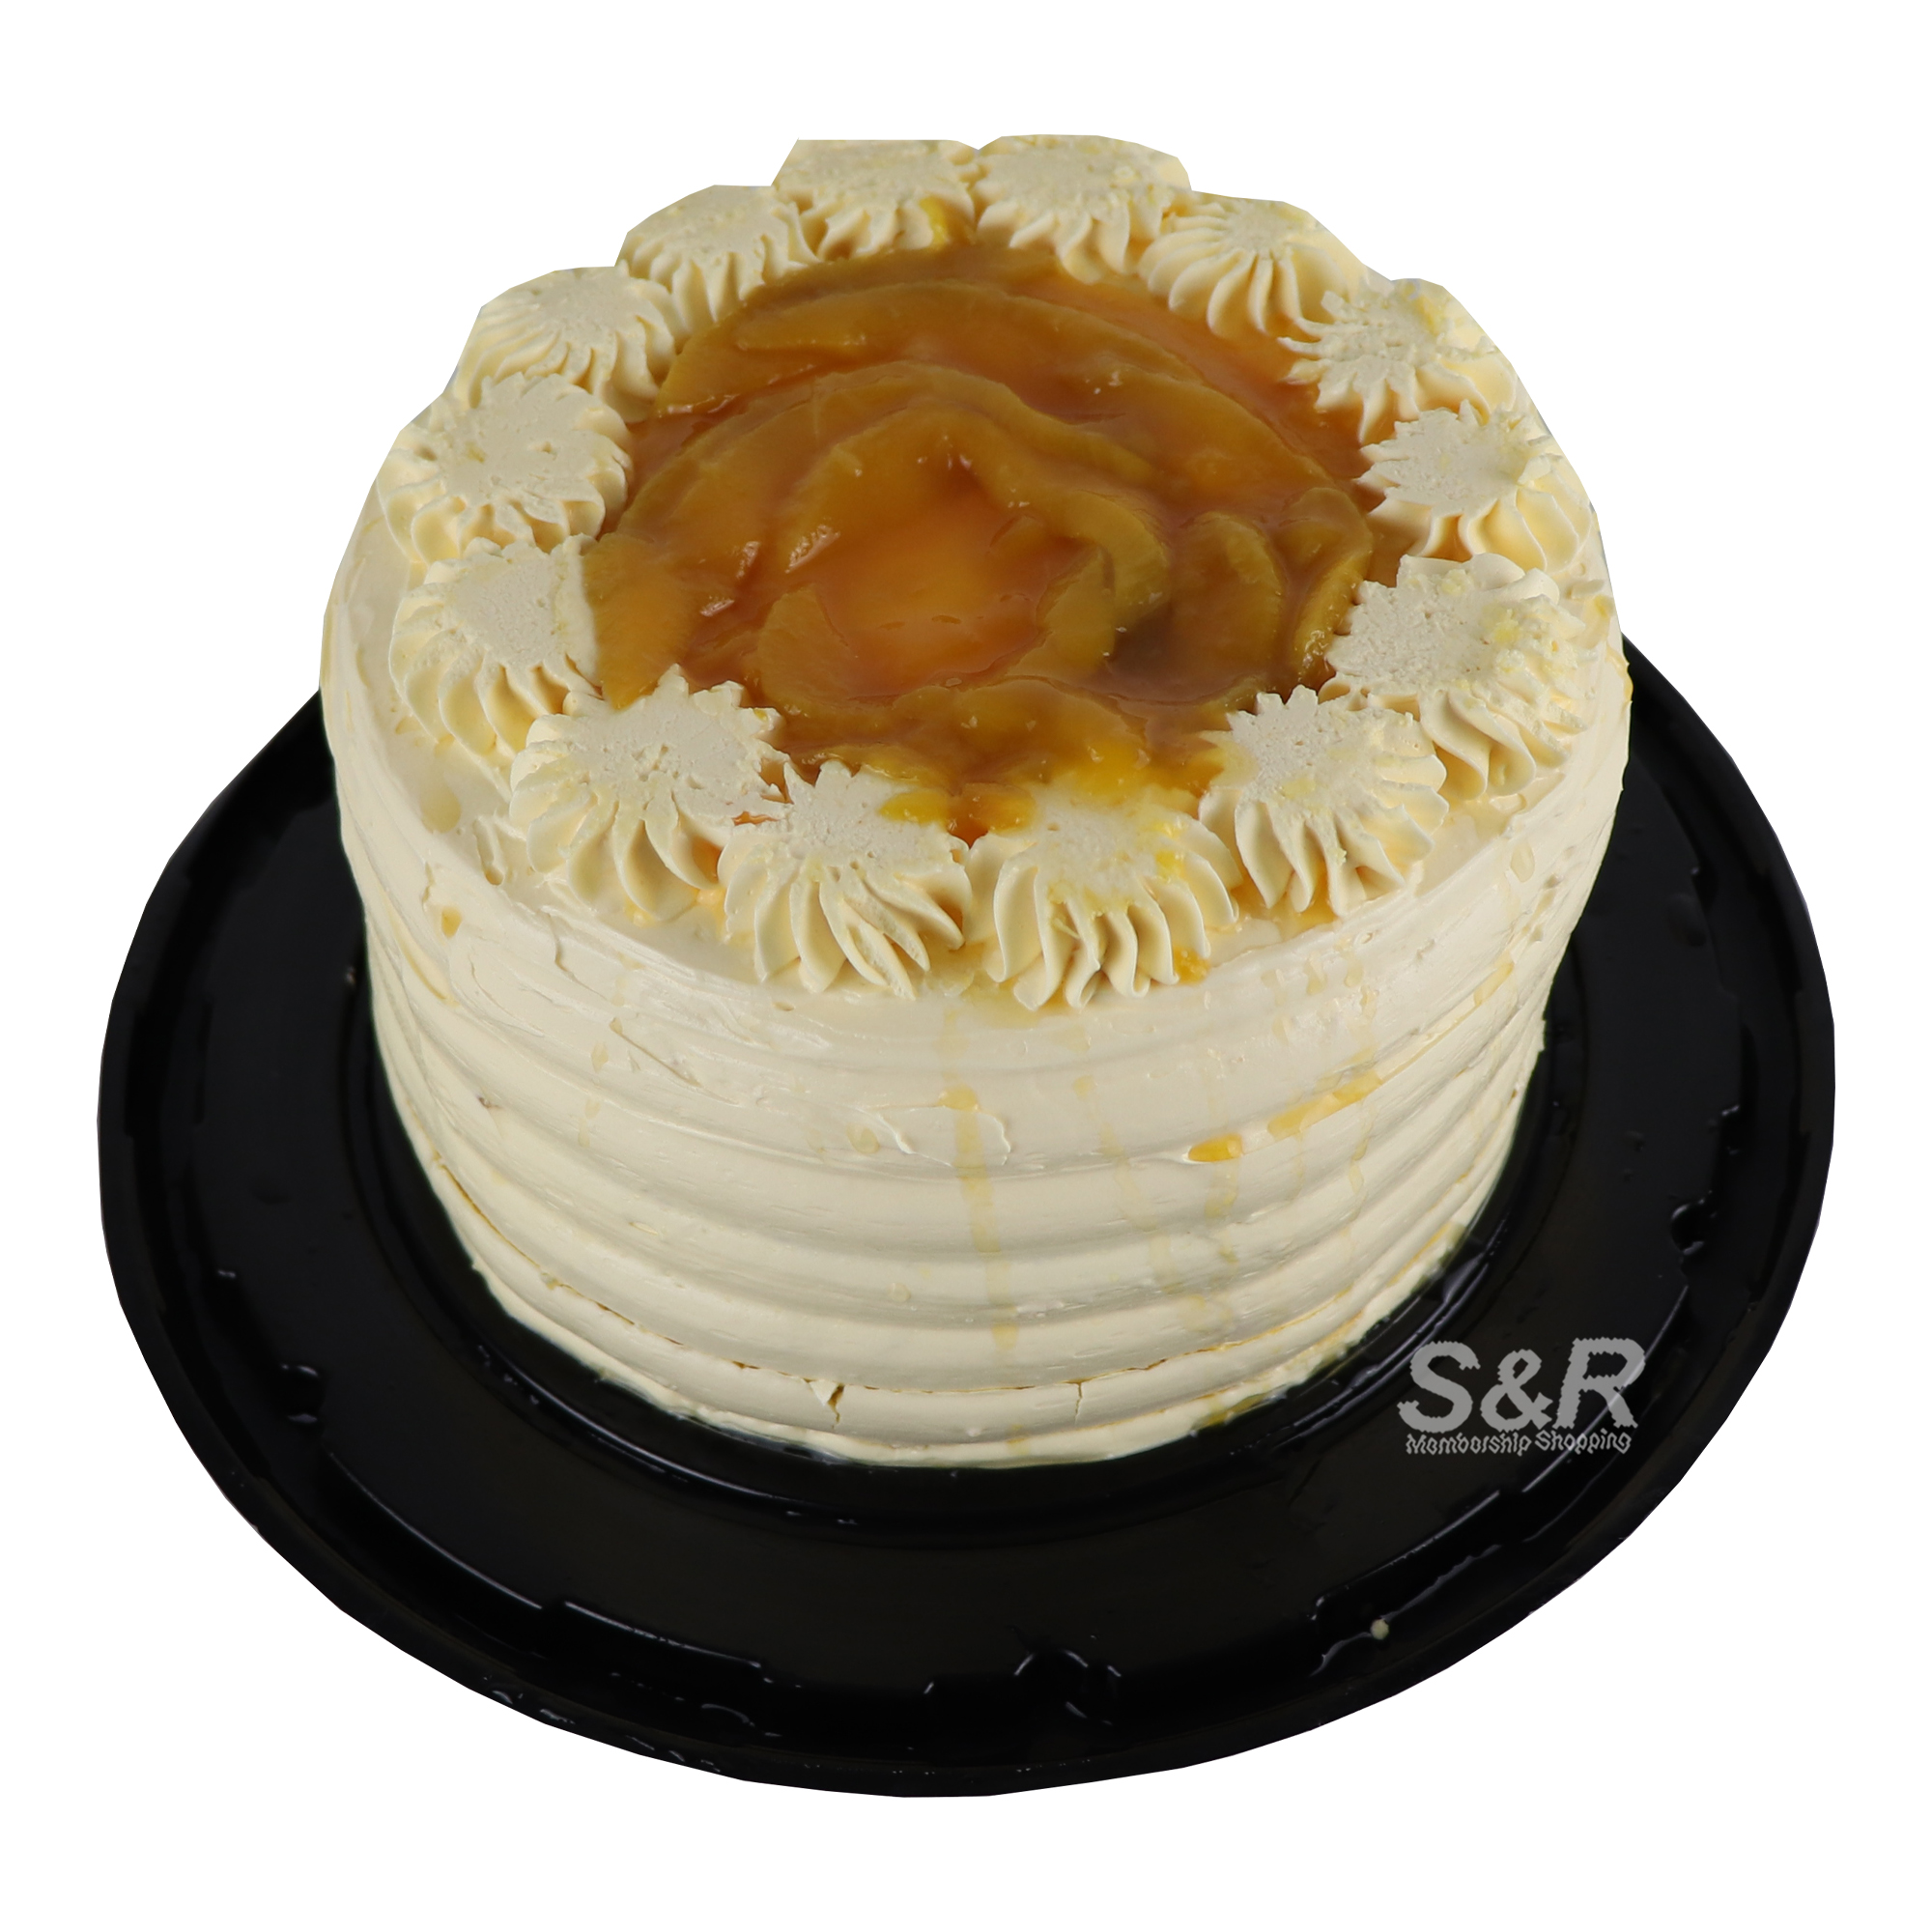 S&R Mango Shortcake 6in